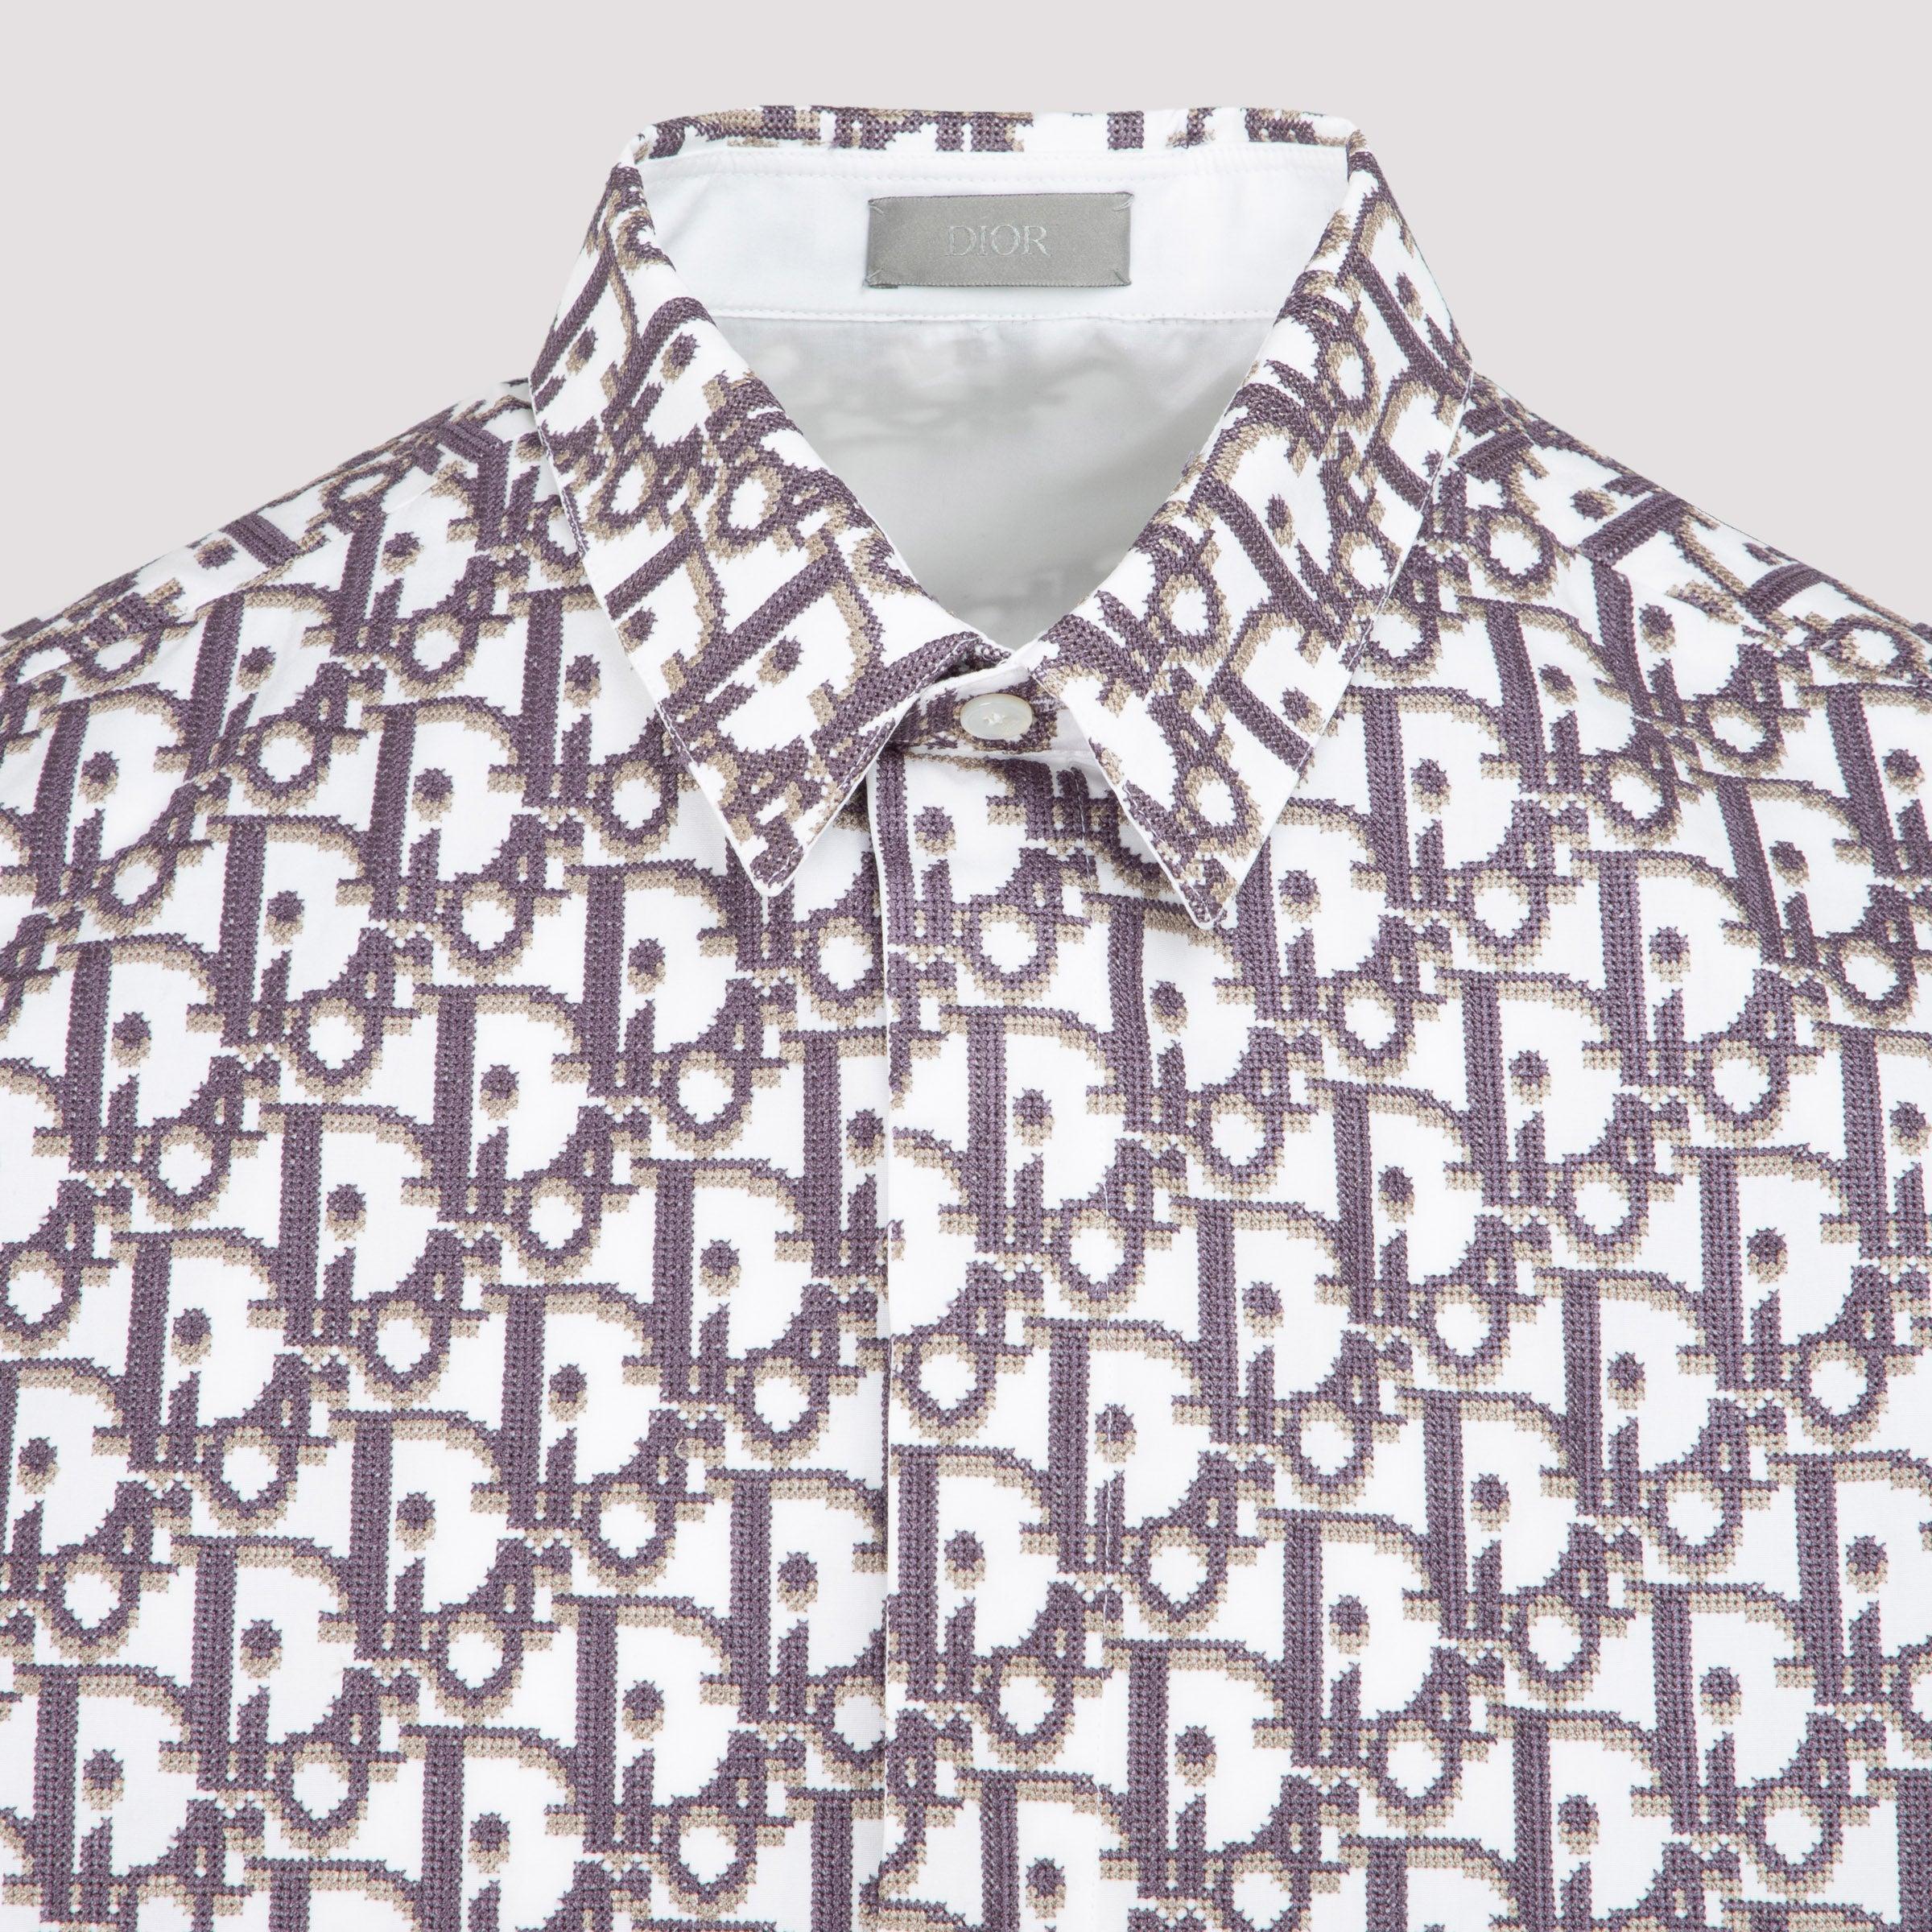 Dior Cotton T-shirt for Men | Lyst